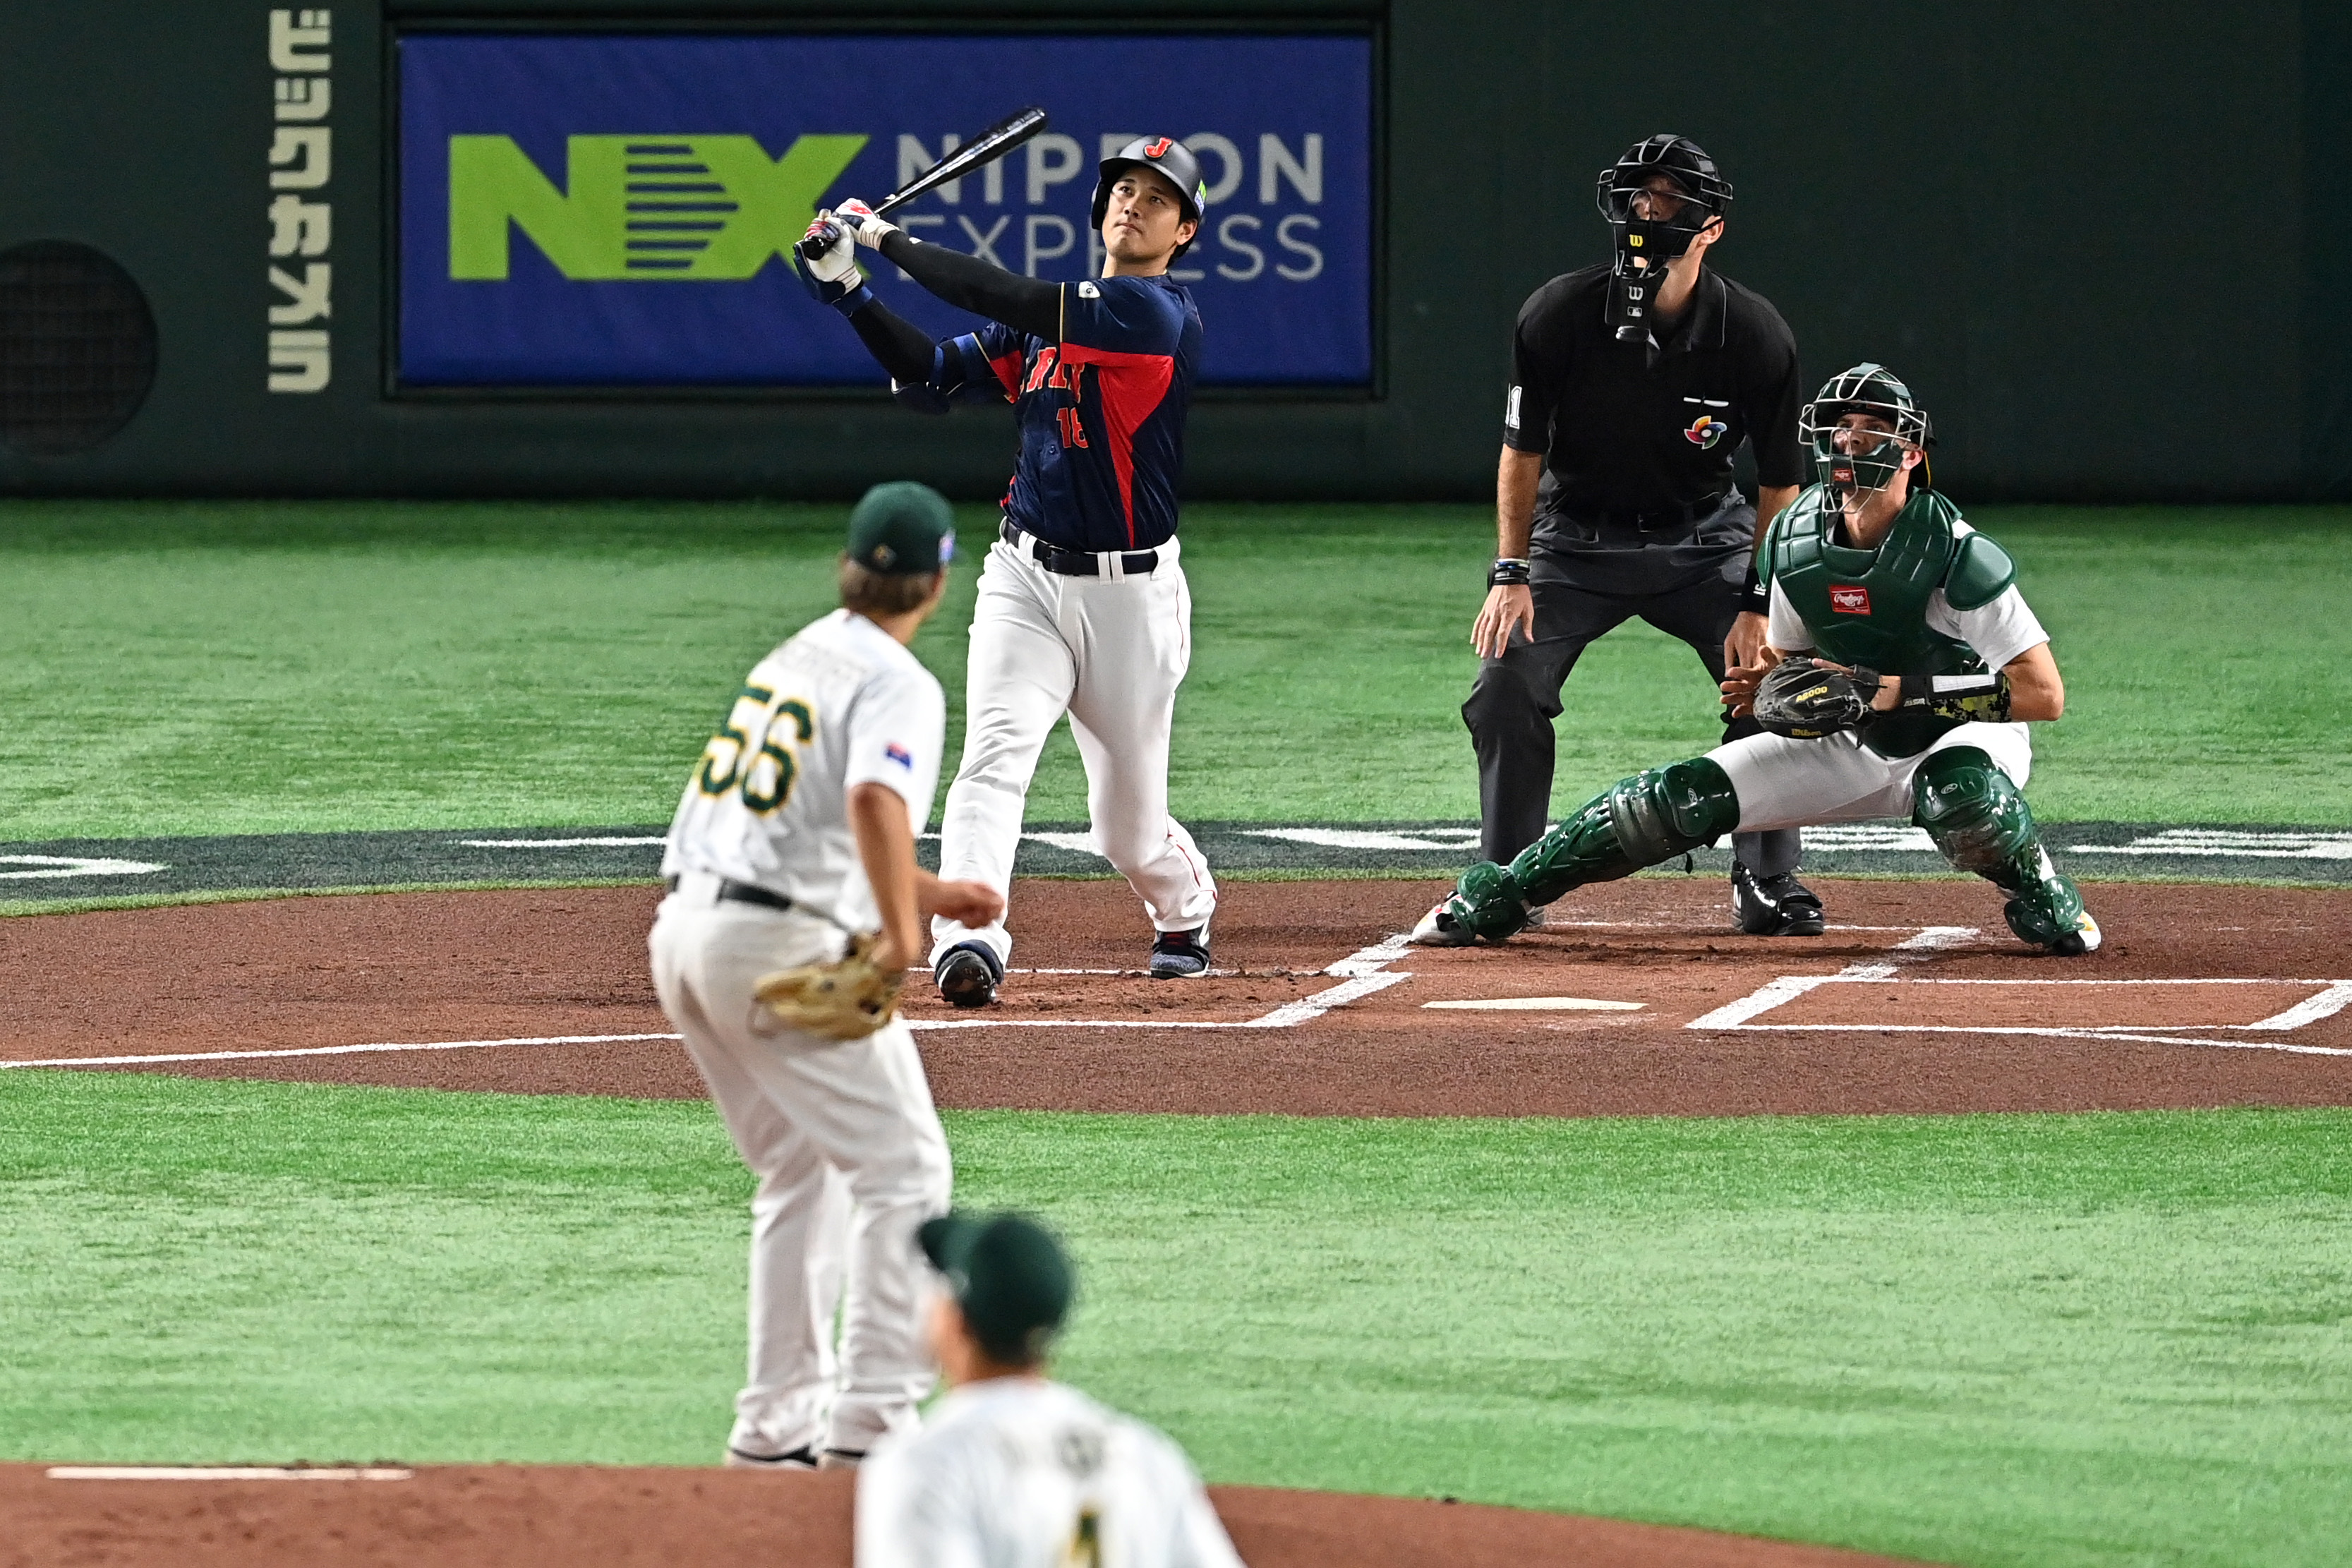 Ohtani hits a home run at the World Baseball Classic.